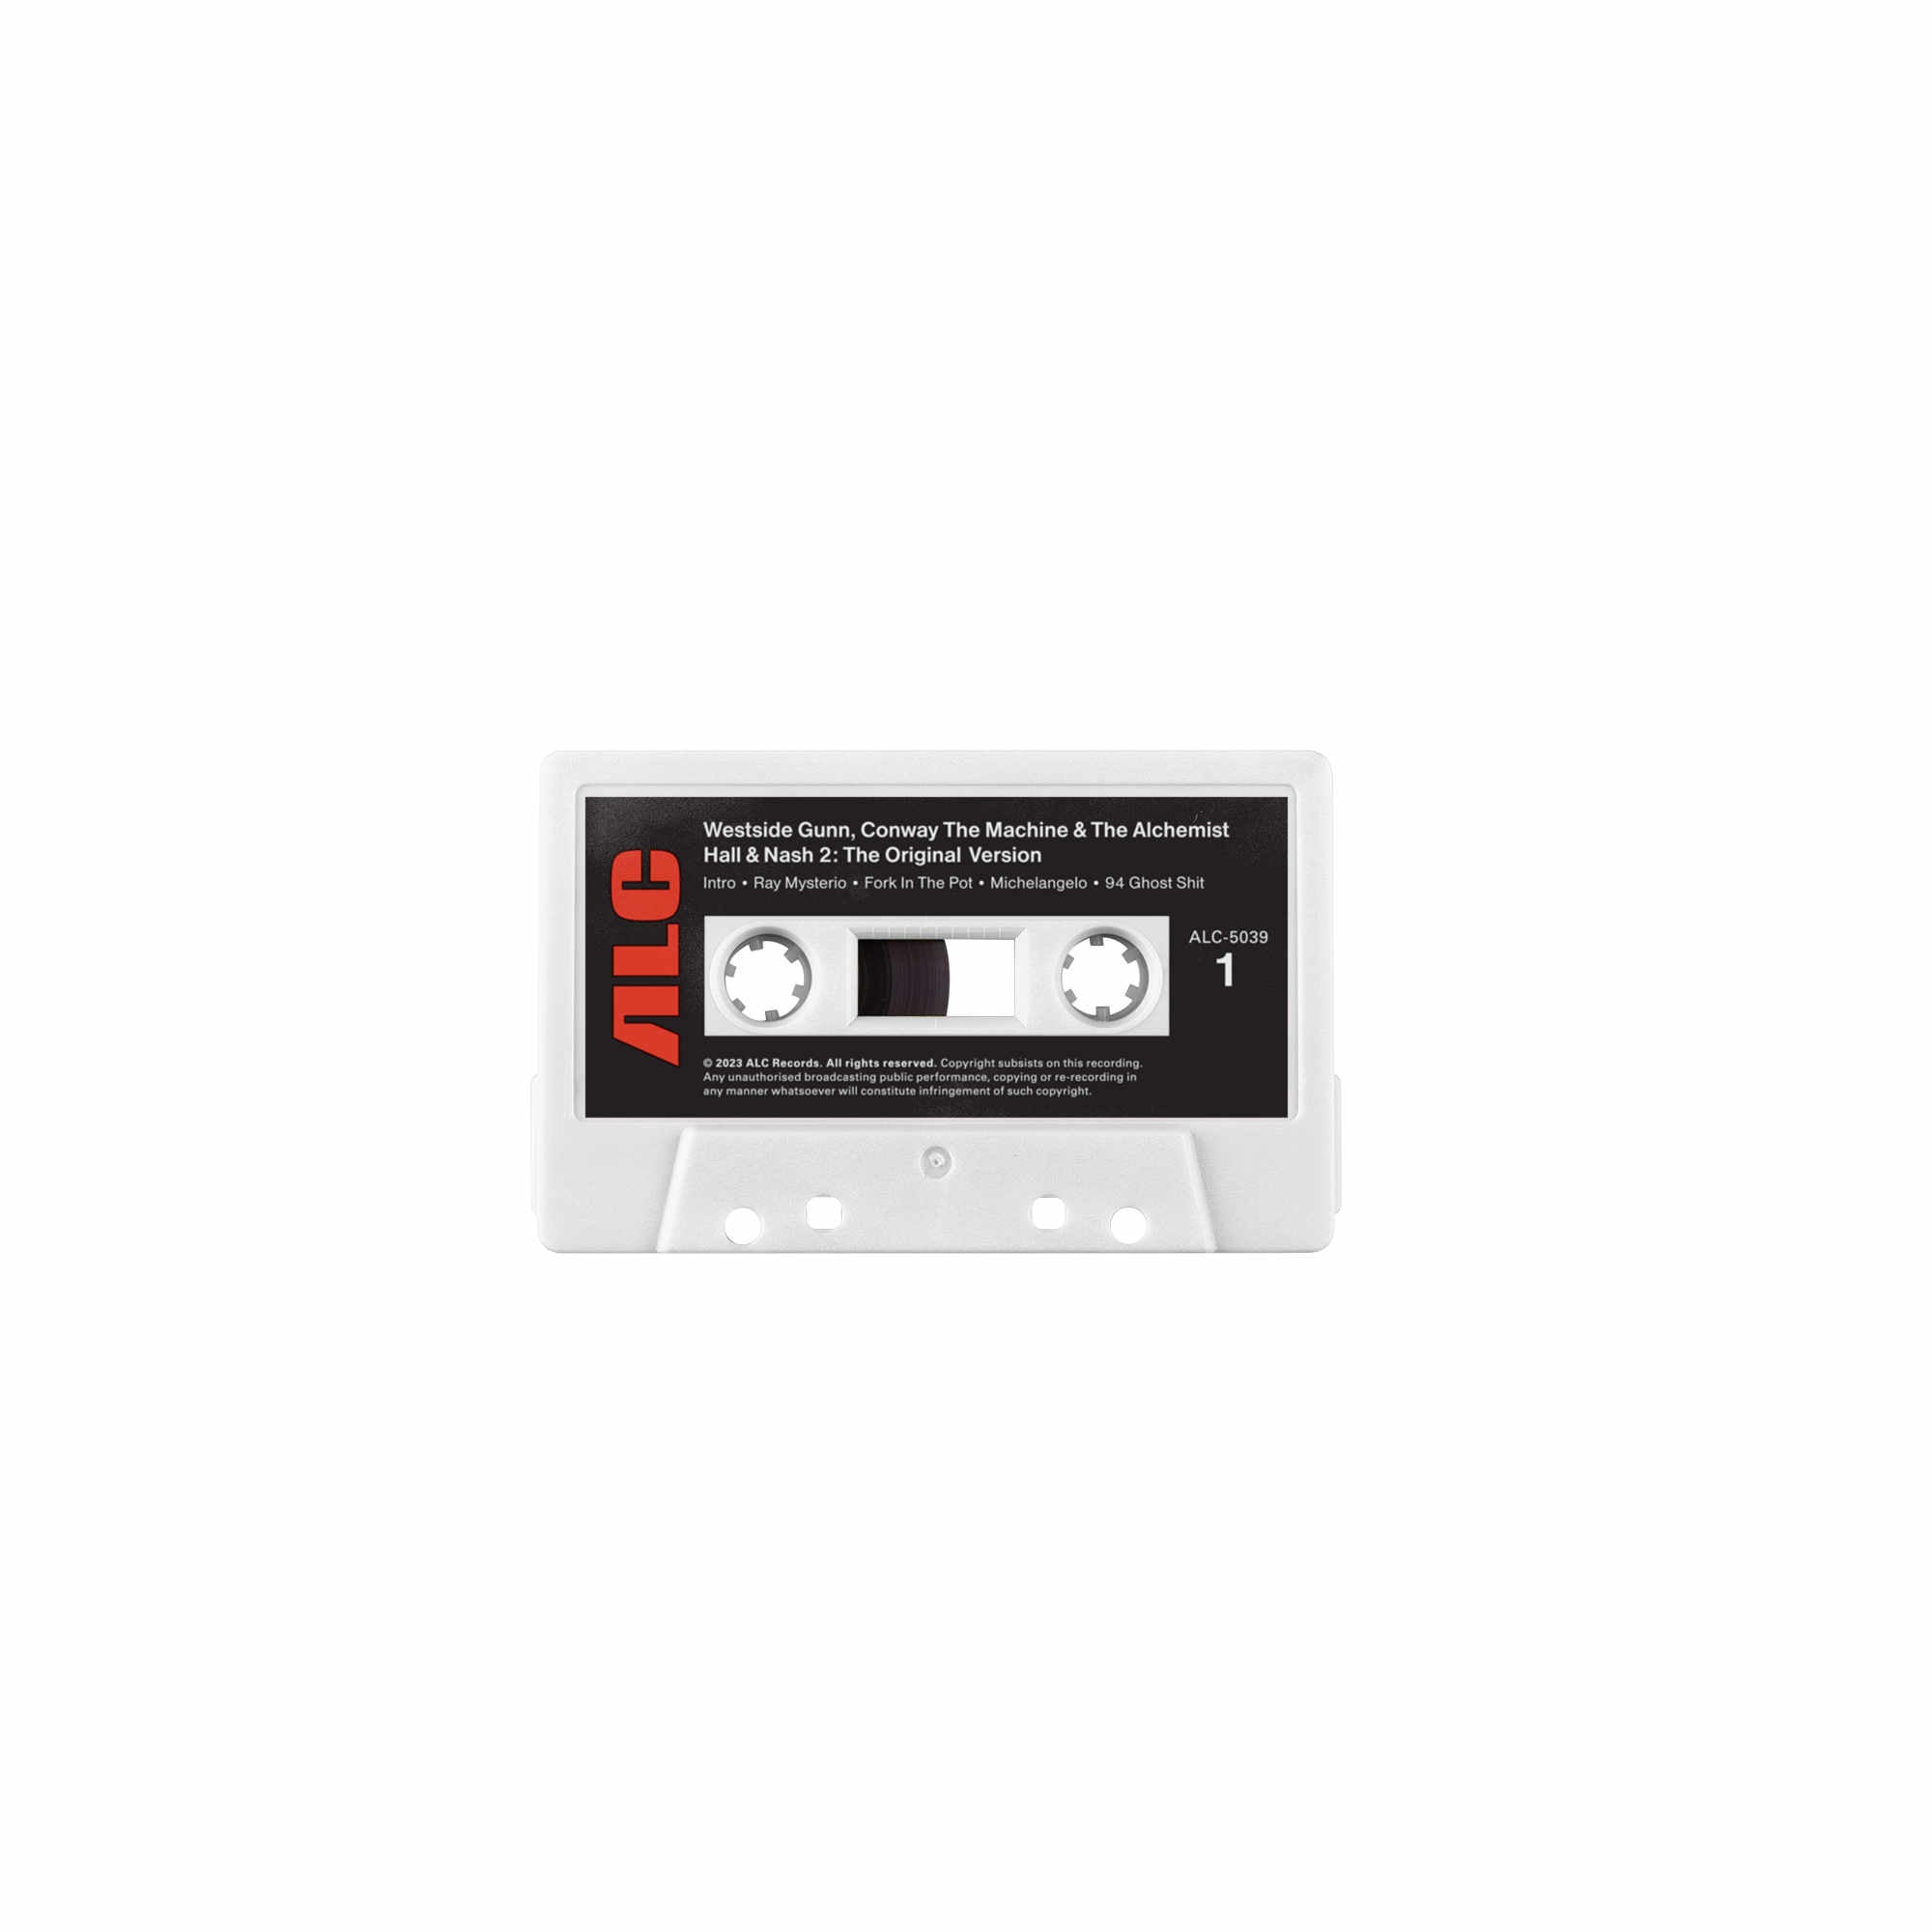 Hall & Nash 2: The Original Version (Cassette - Alternate Cover)